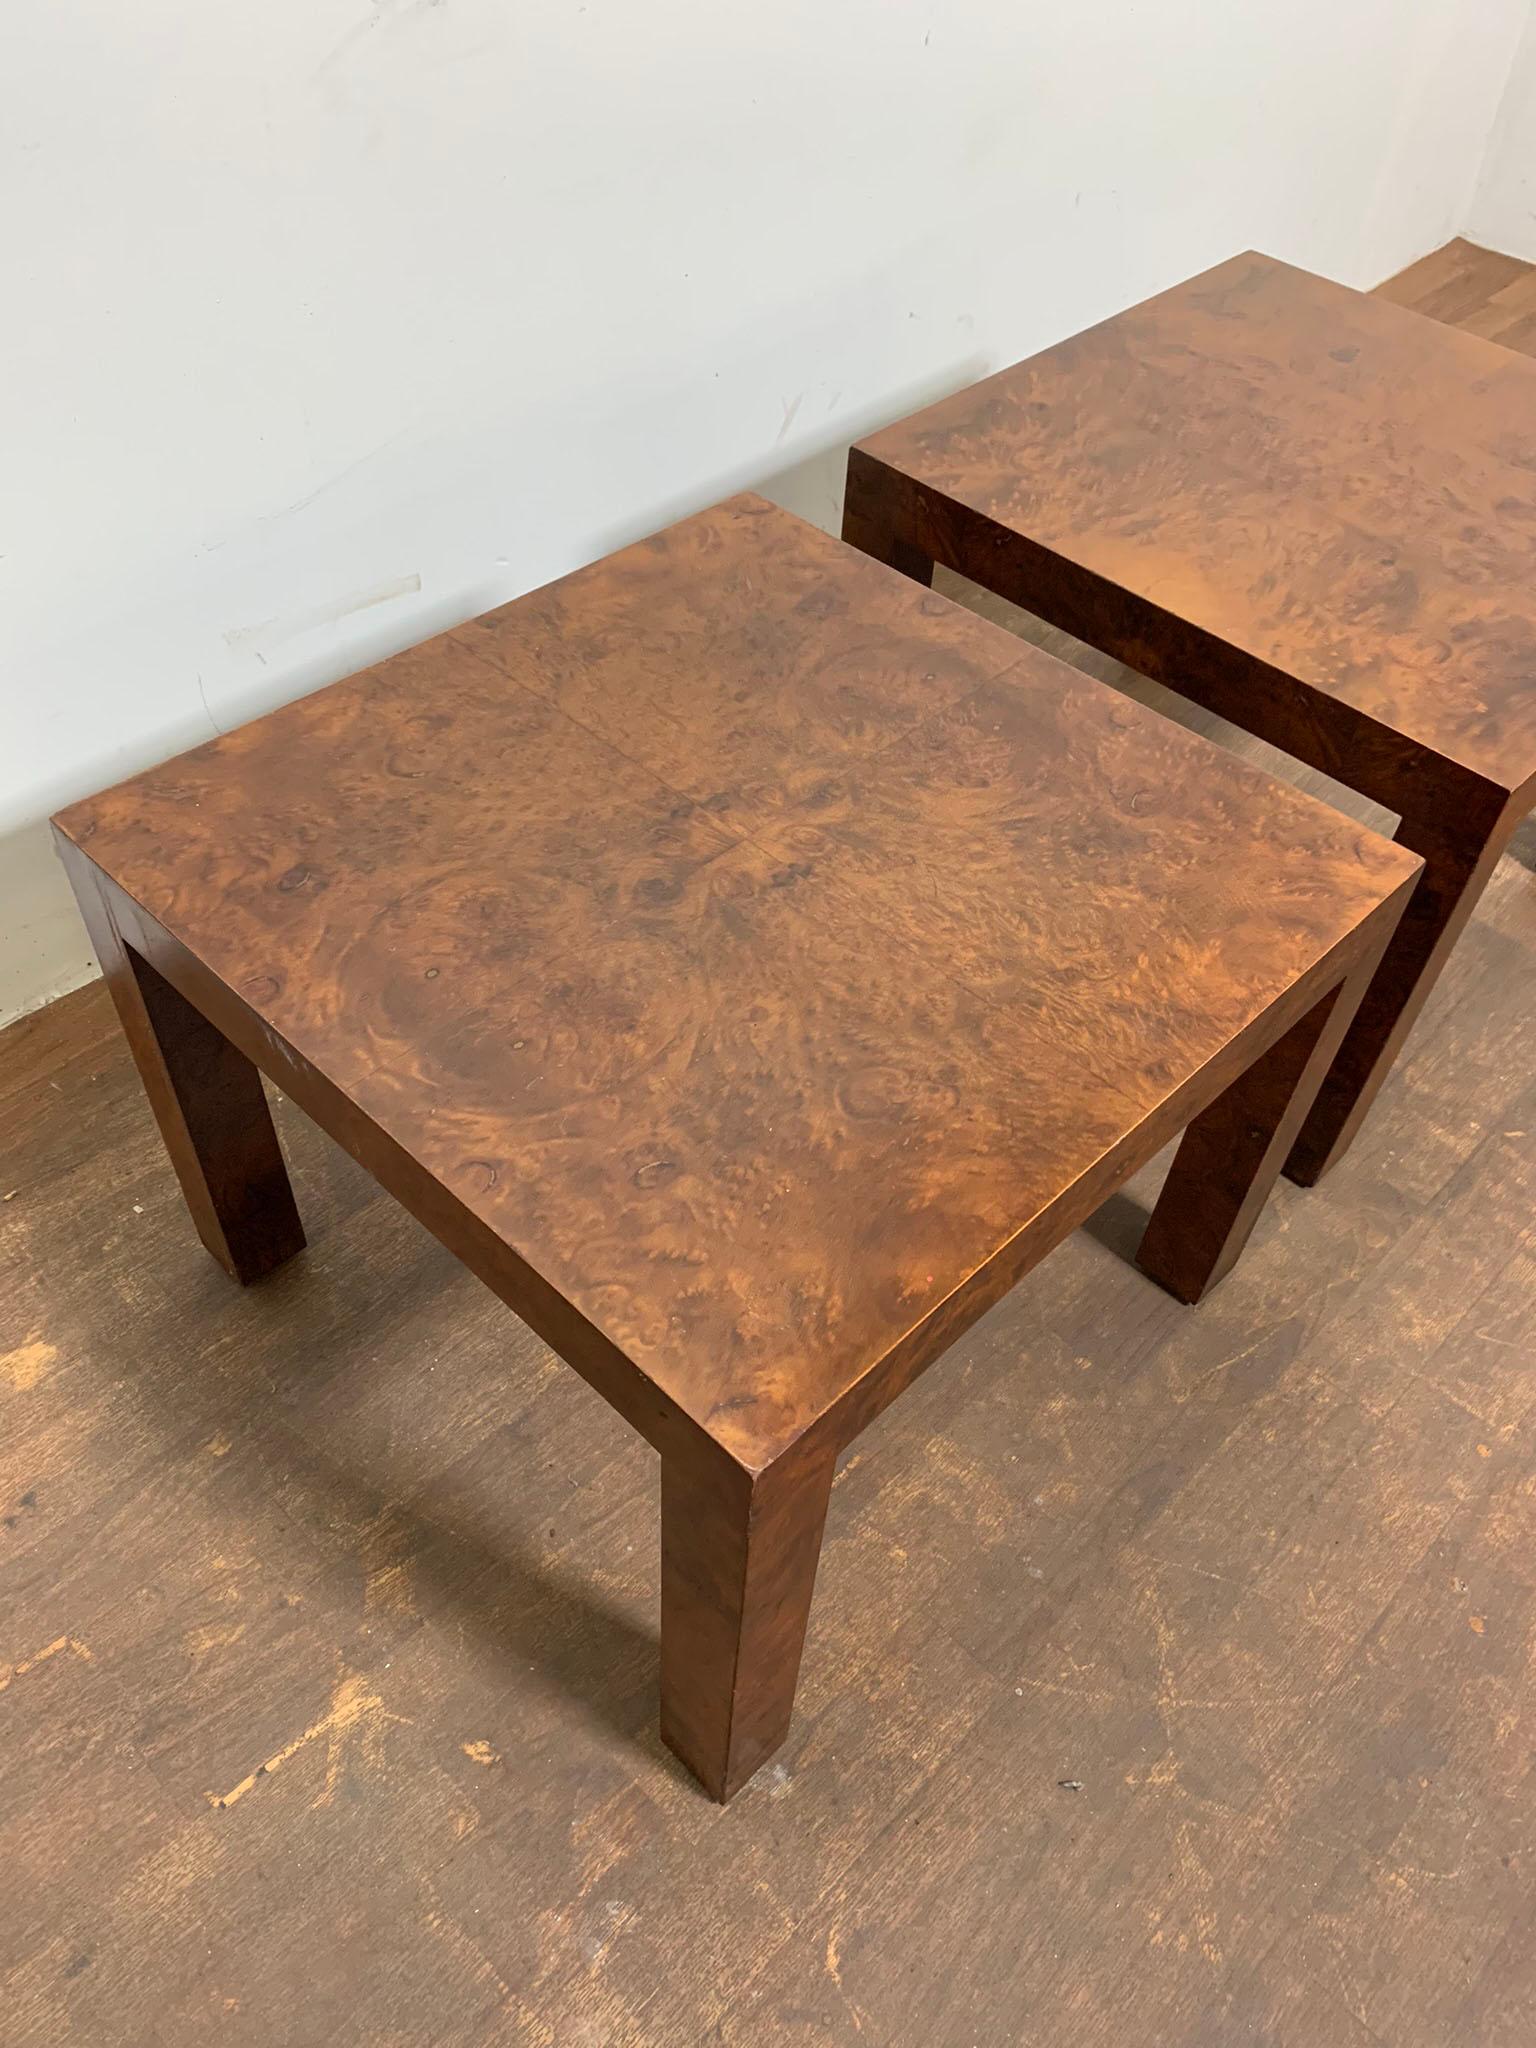 burled wood side table